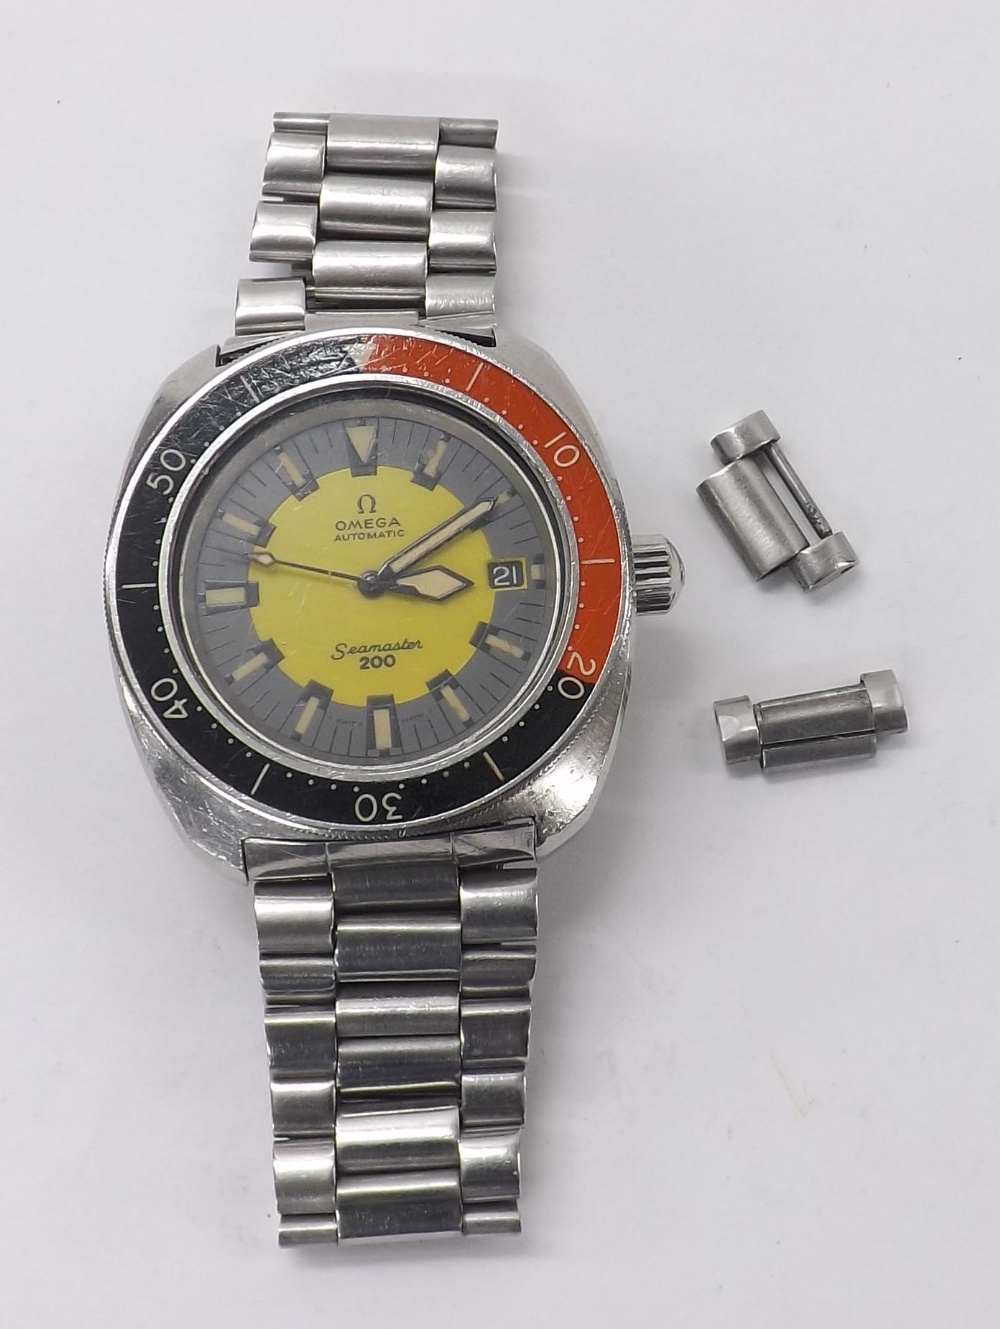 Rare Omega Seamaster 200 'Banana' automatic chronograph stainless steel gentleman's bracelet - Image 5 of 5